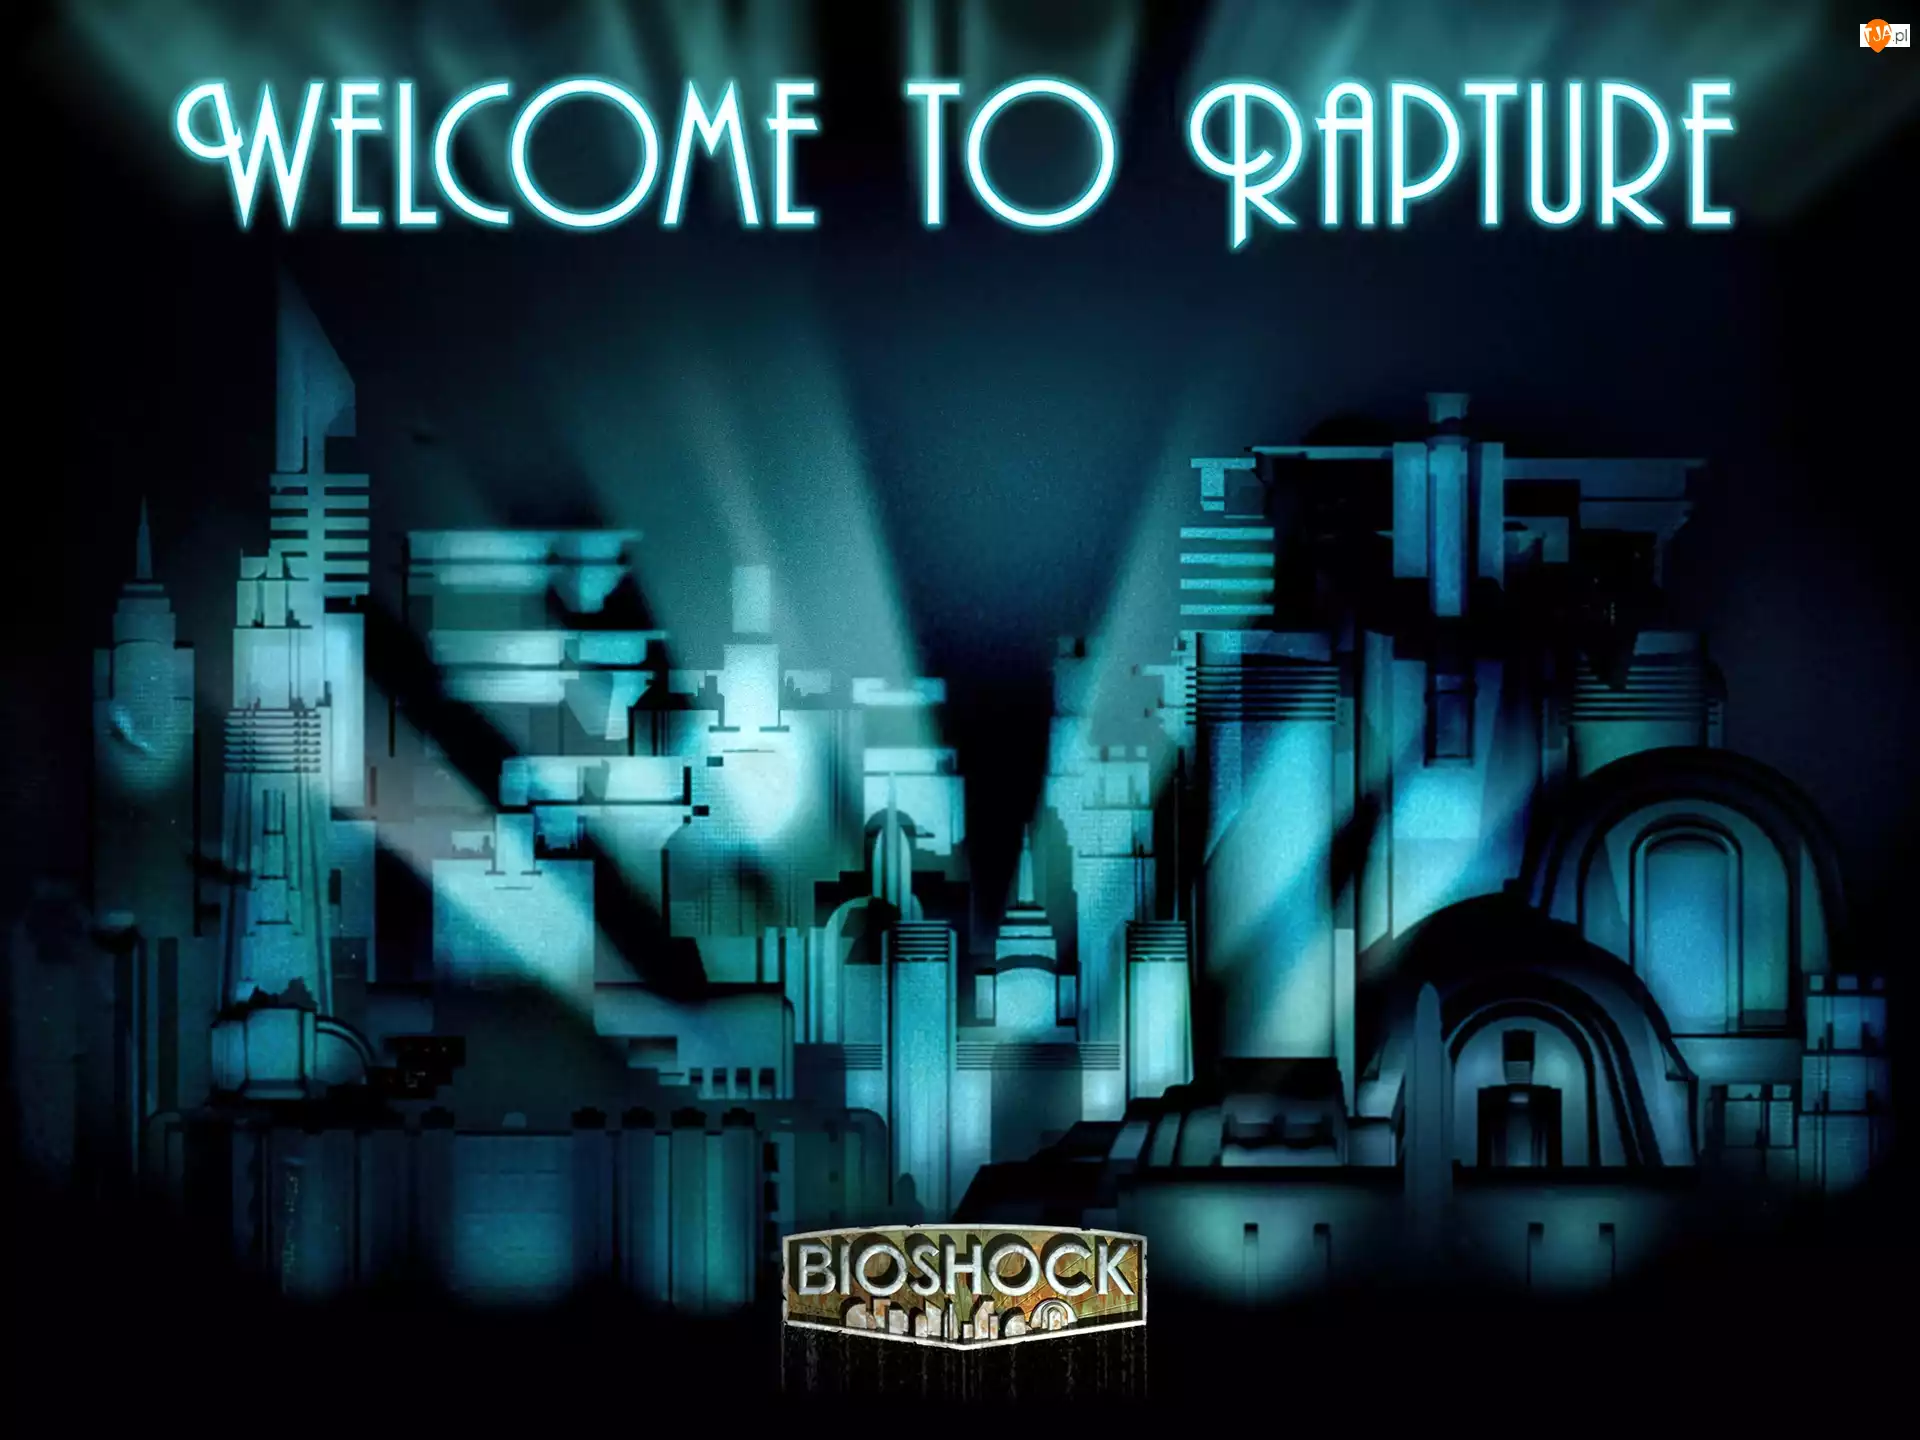 Welcome to Rapture, Bioshock